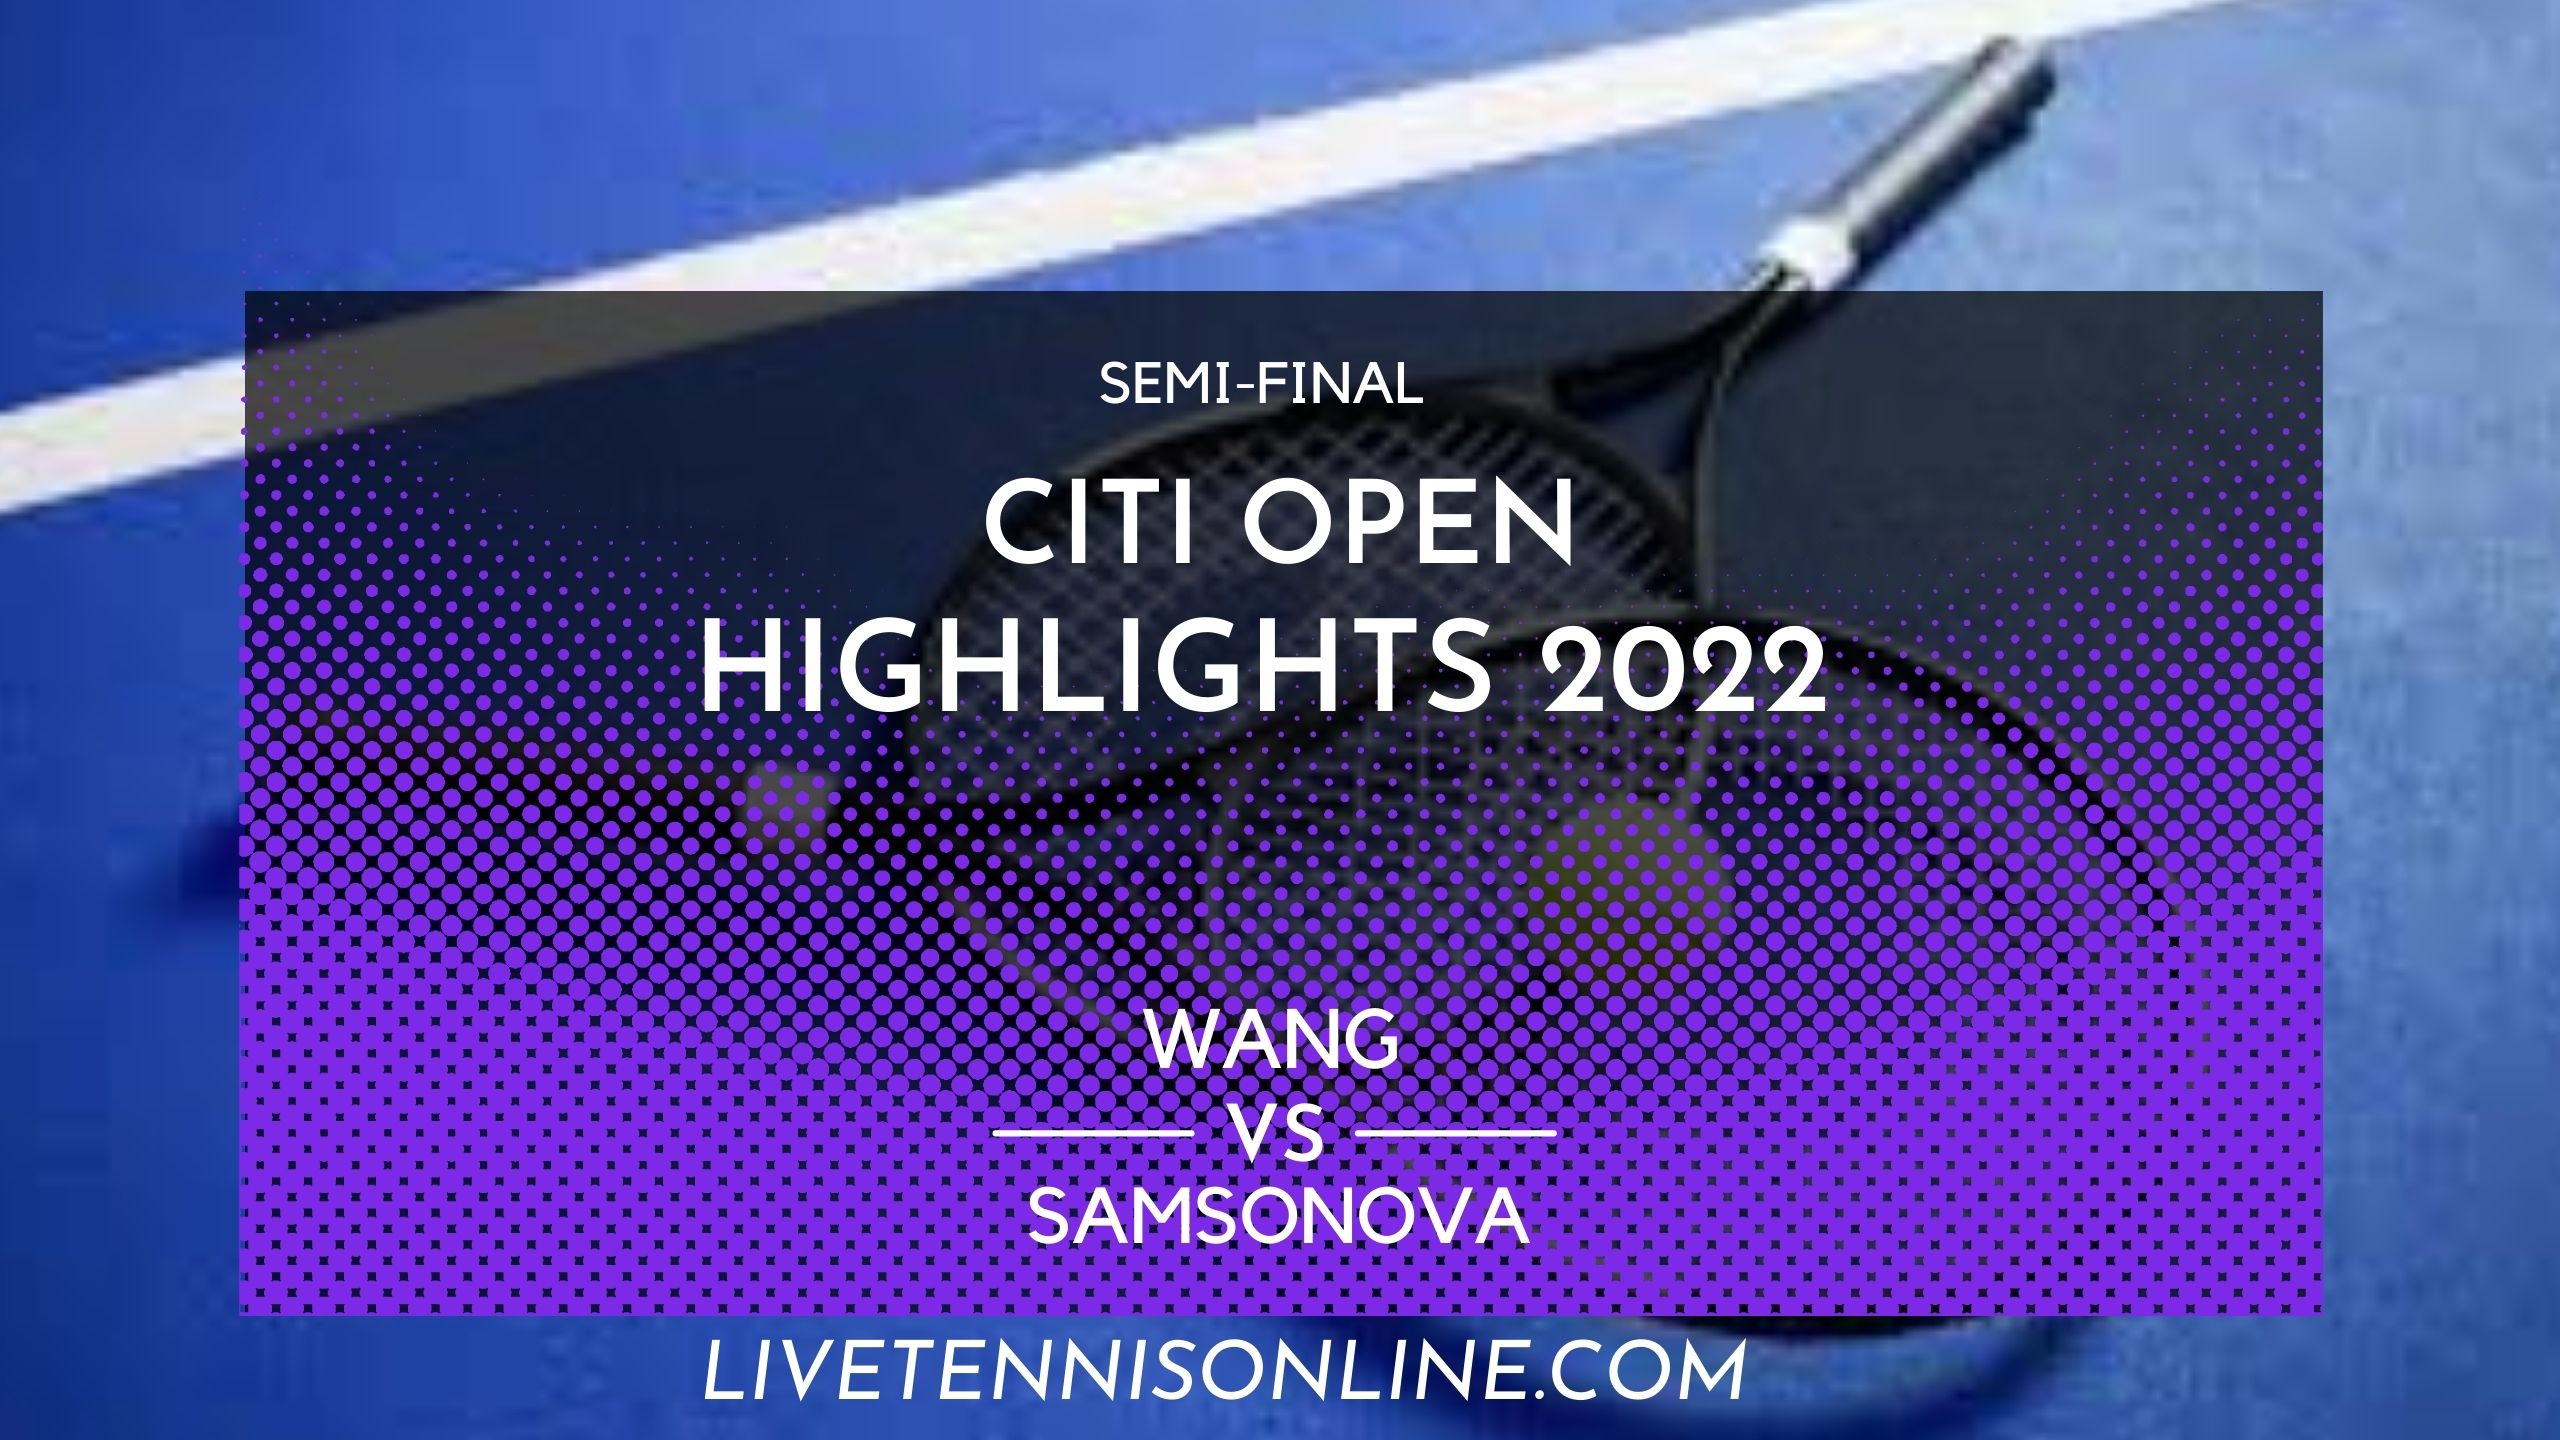 Wang Vs Samsonova SF Highlights 2022 Citi Open